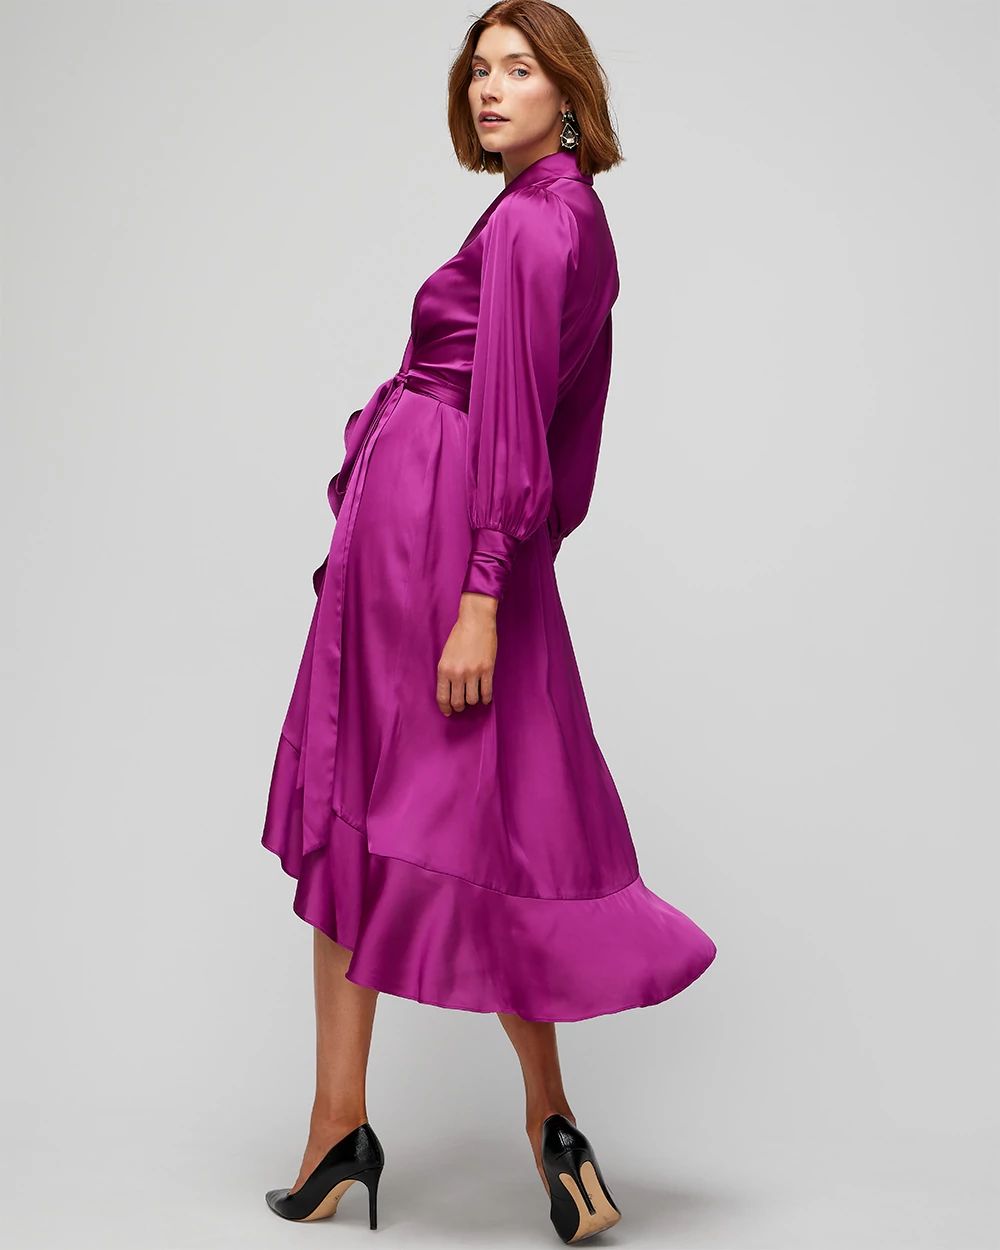 Long Sleeve Satin Ruffle Wrap Dress click to view larger image.